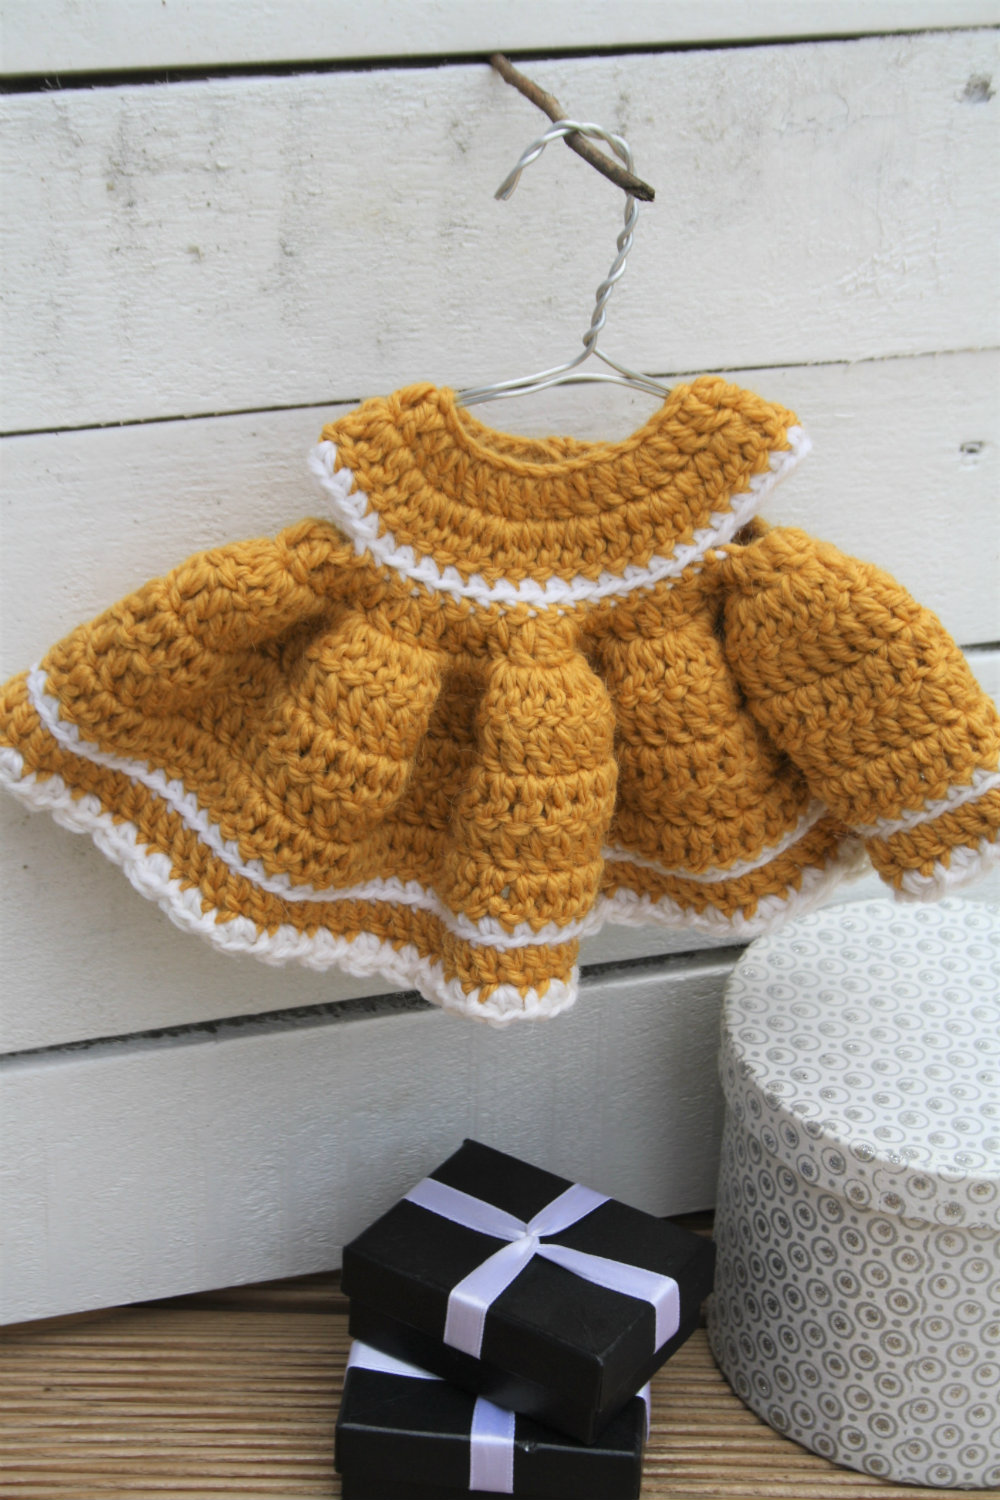 Crochet dress pattern | Crochet dress for amigurumi doll or animal